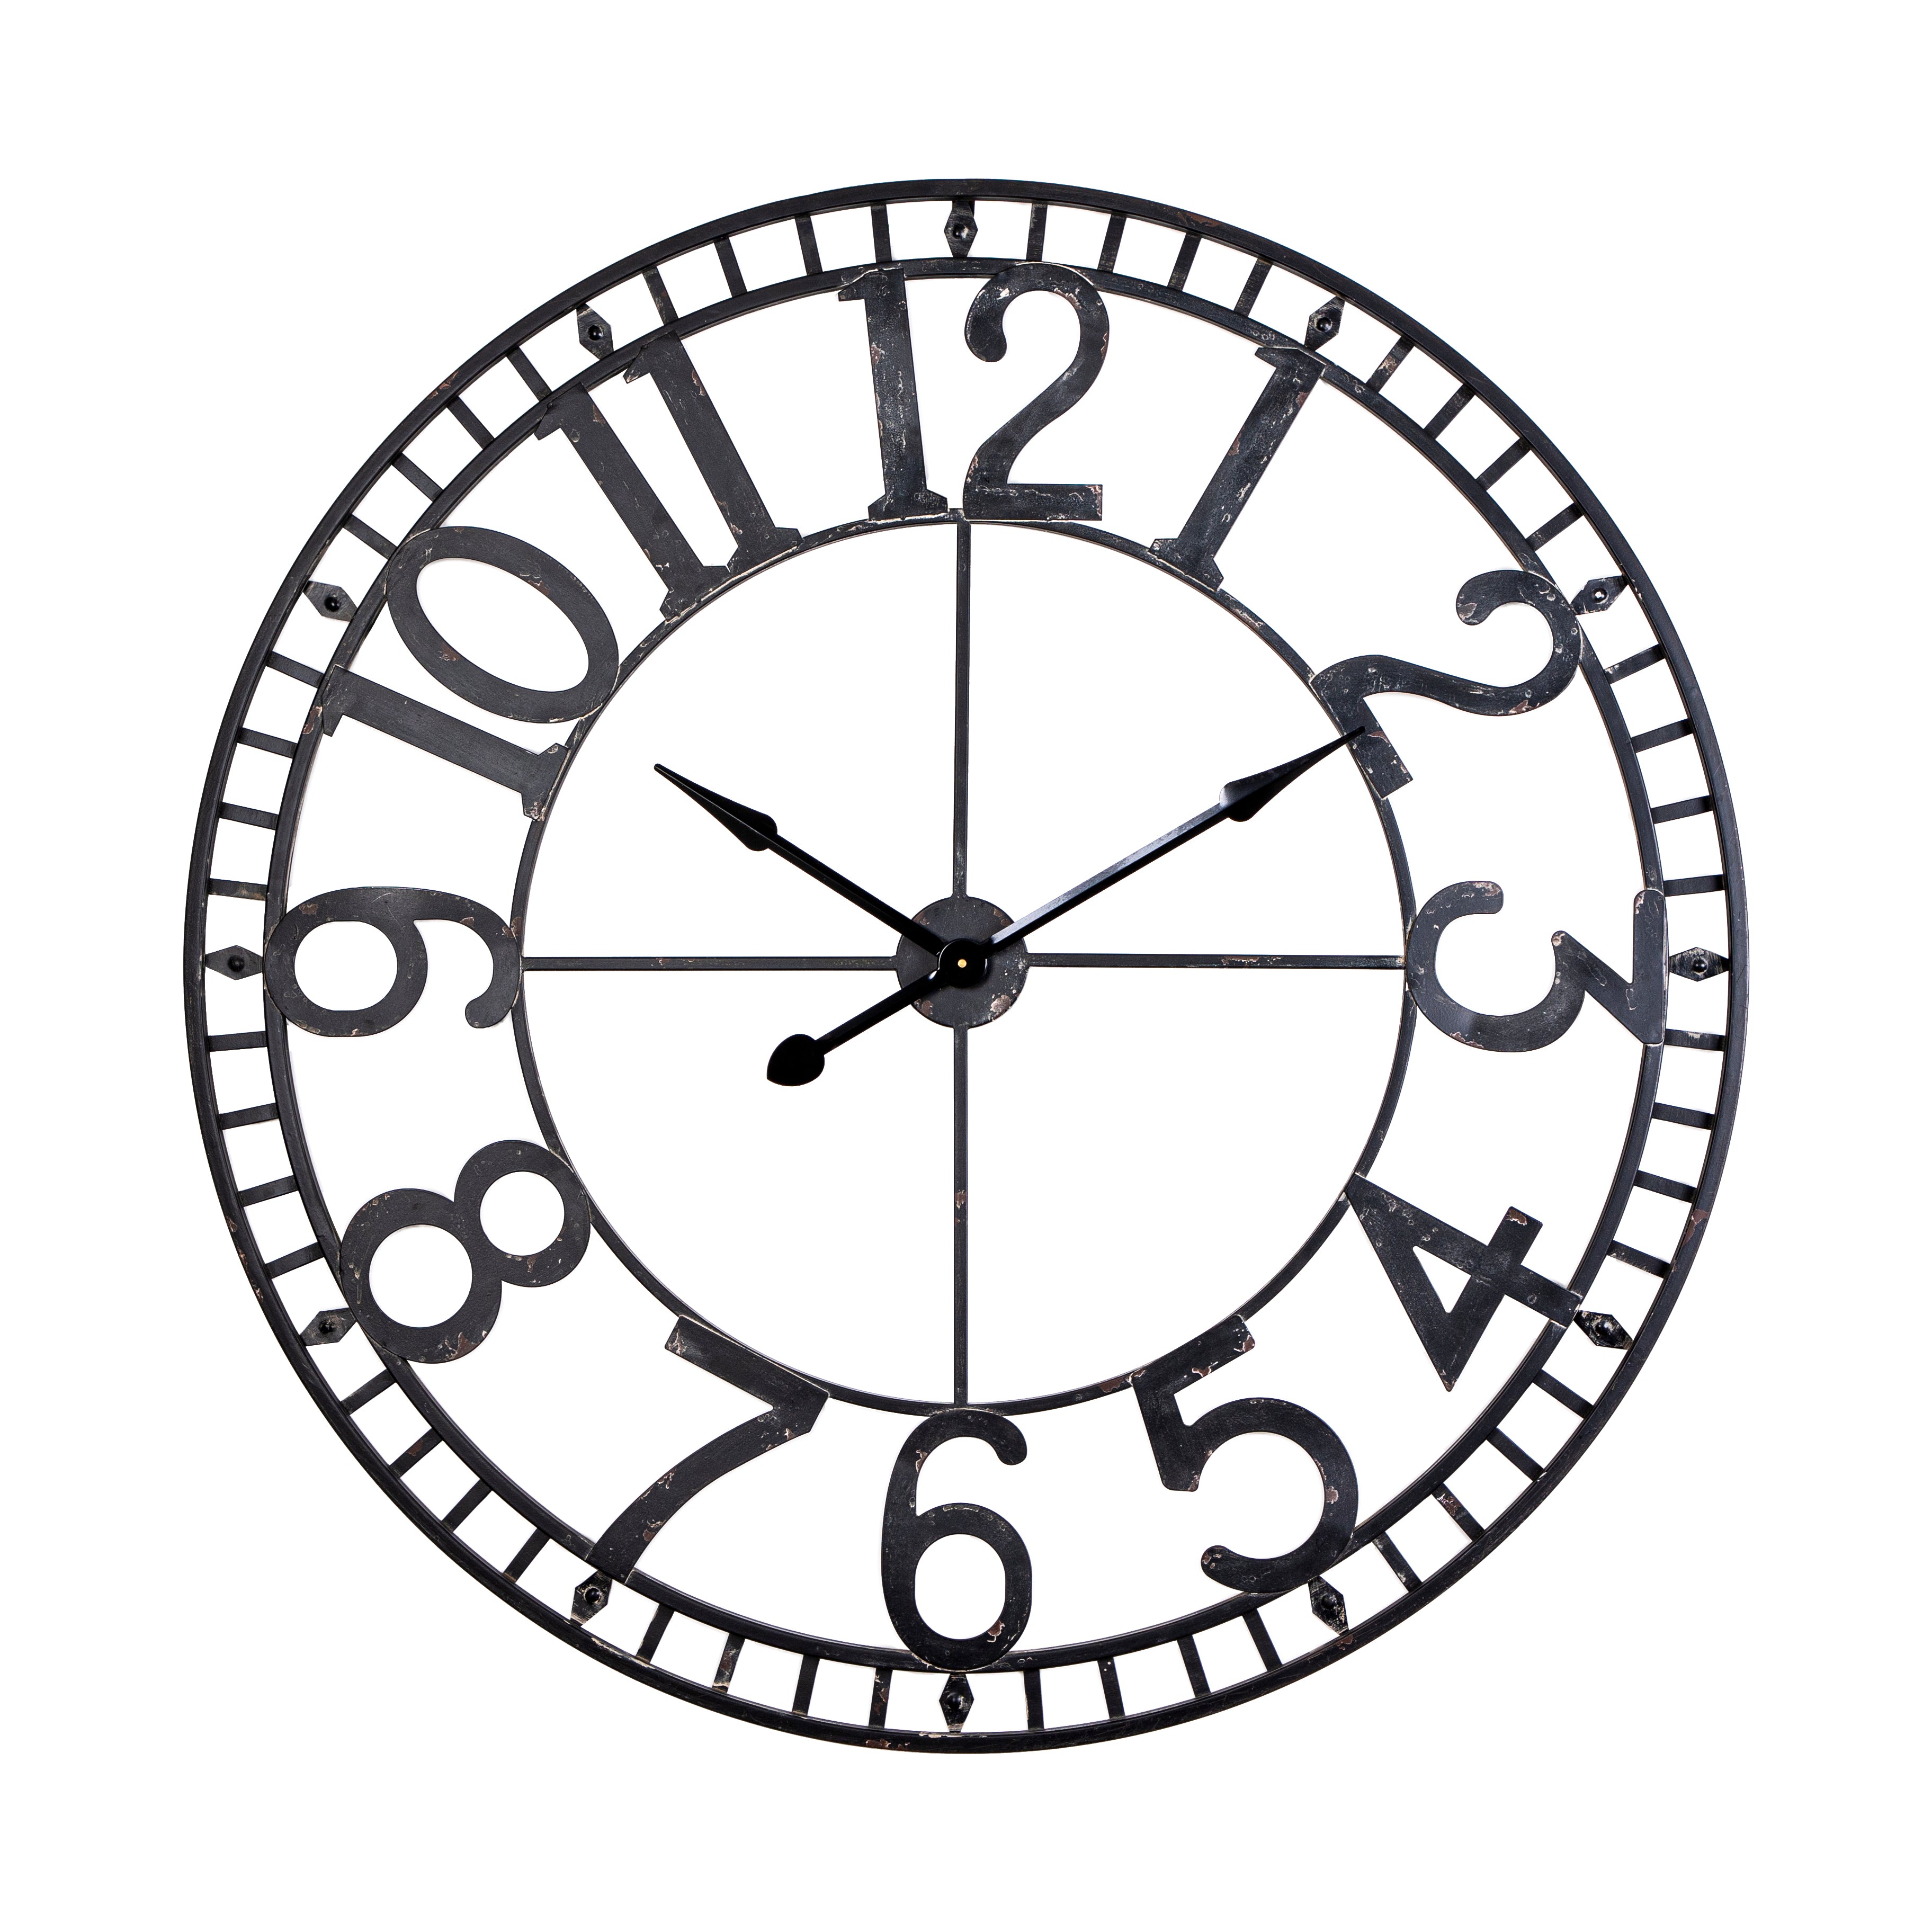 Loft97 CL56BK Manhattan Industrial Wall Clock, Analog, Black, 32